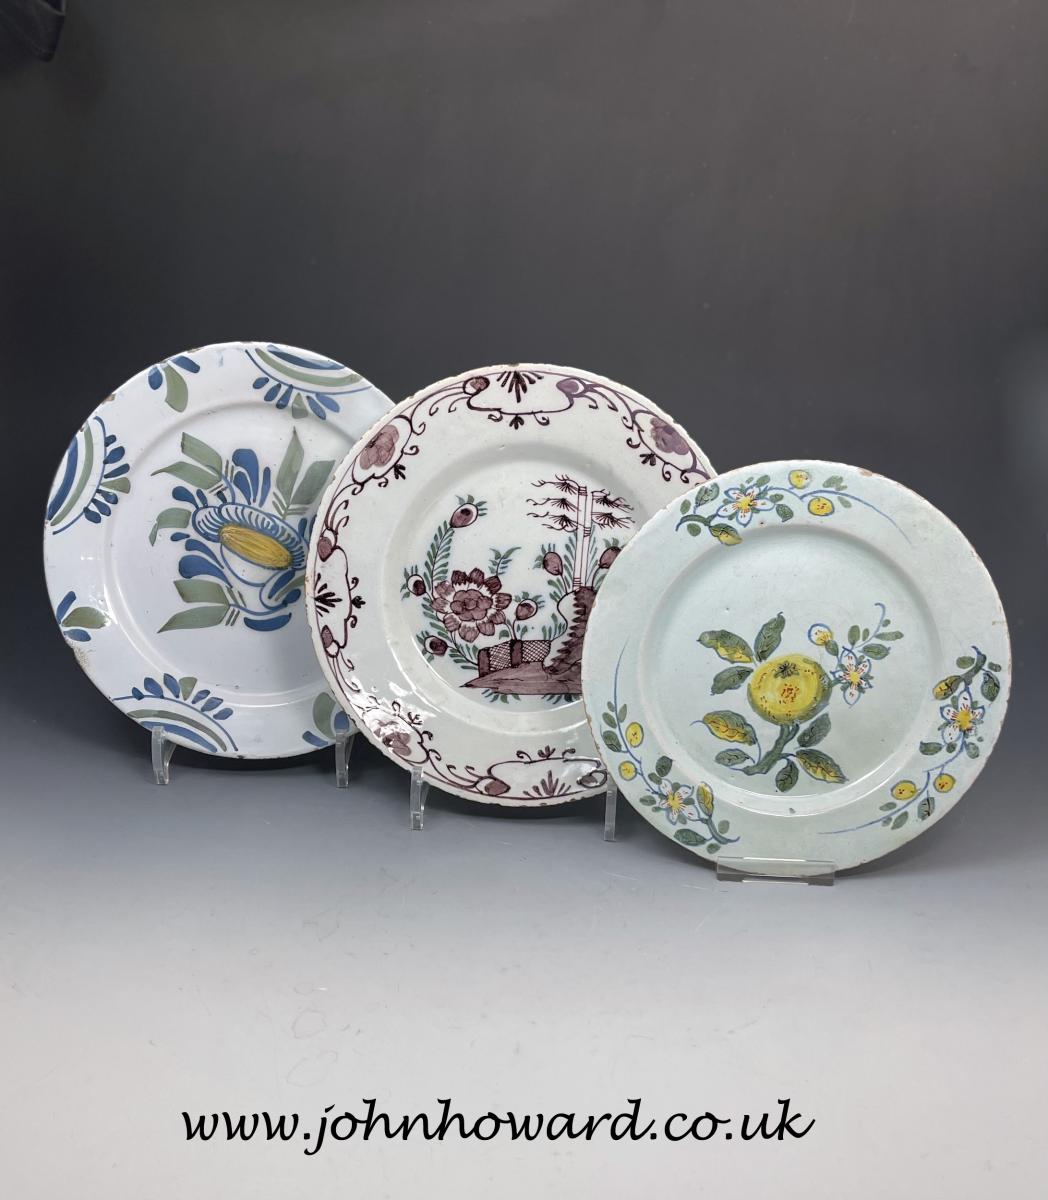 Three English delftware plates 18th century